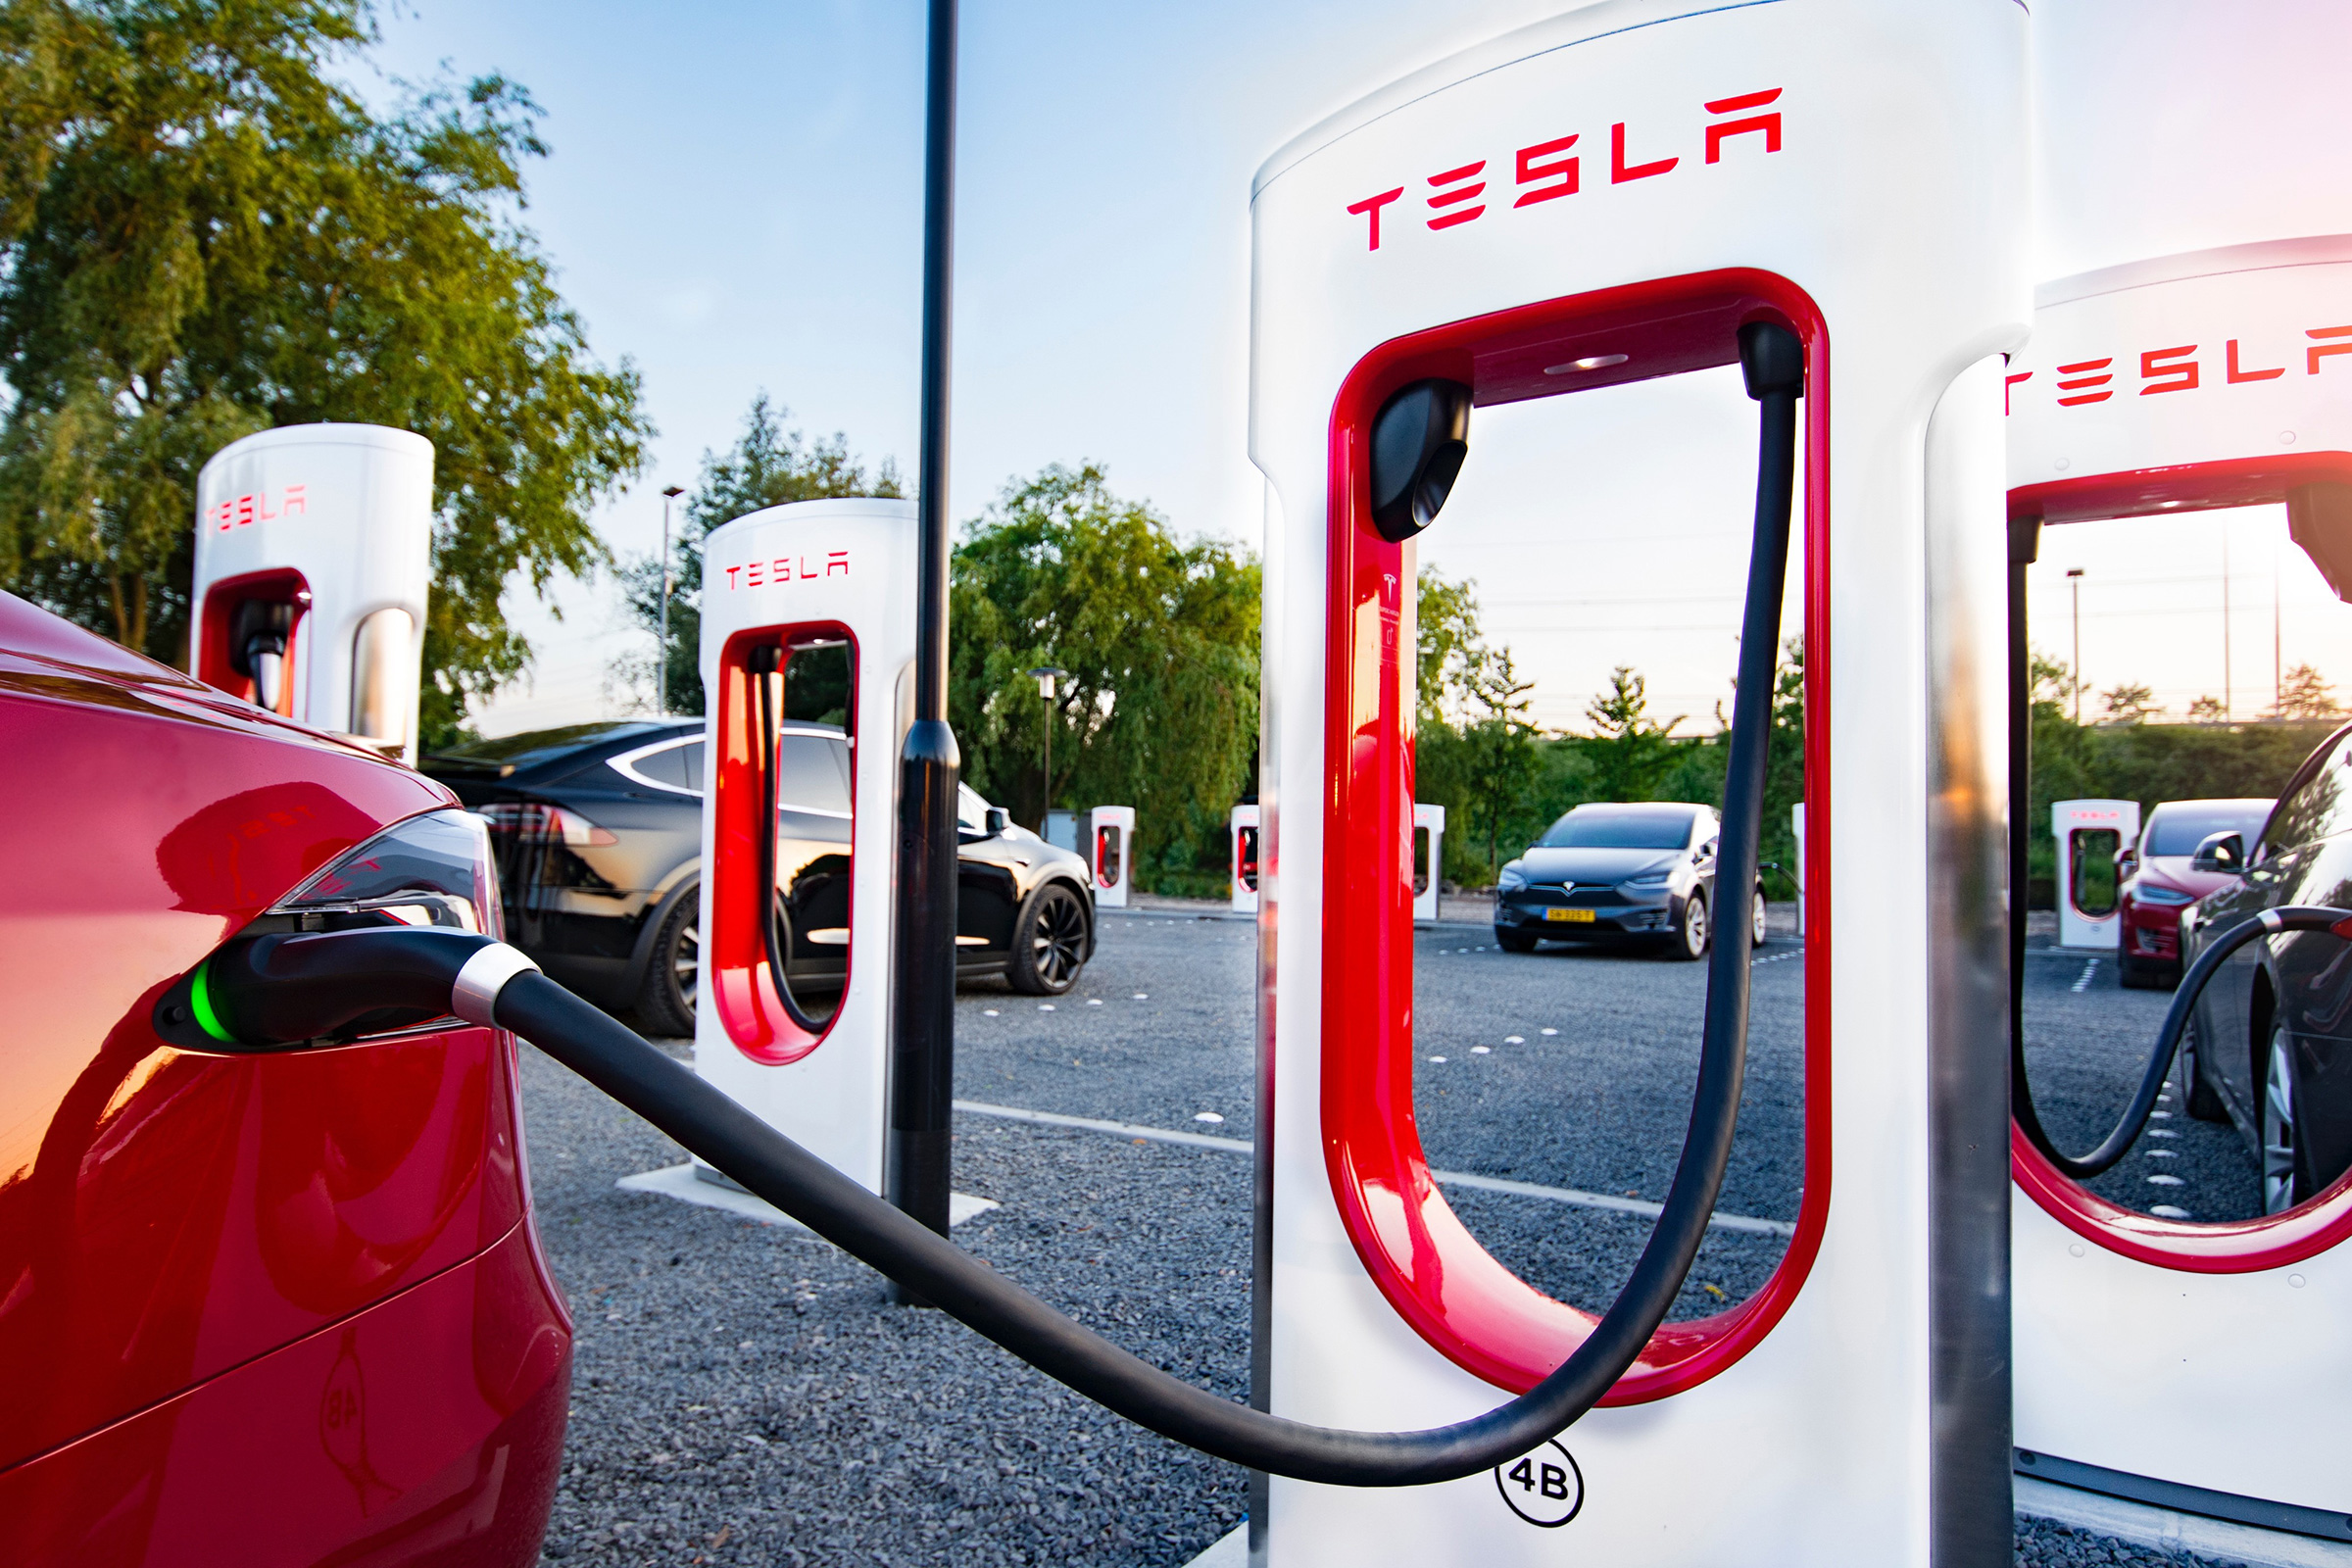 Tesla Supercharger network: complete guide to Tesla charging stations